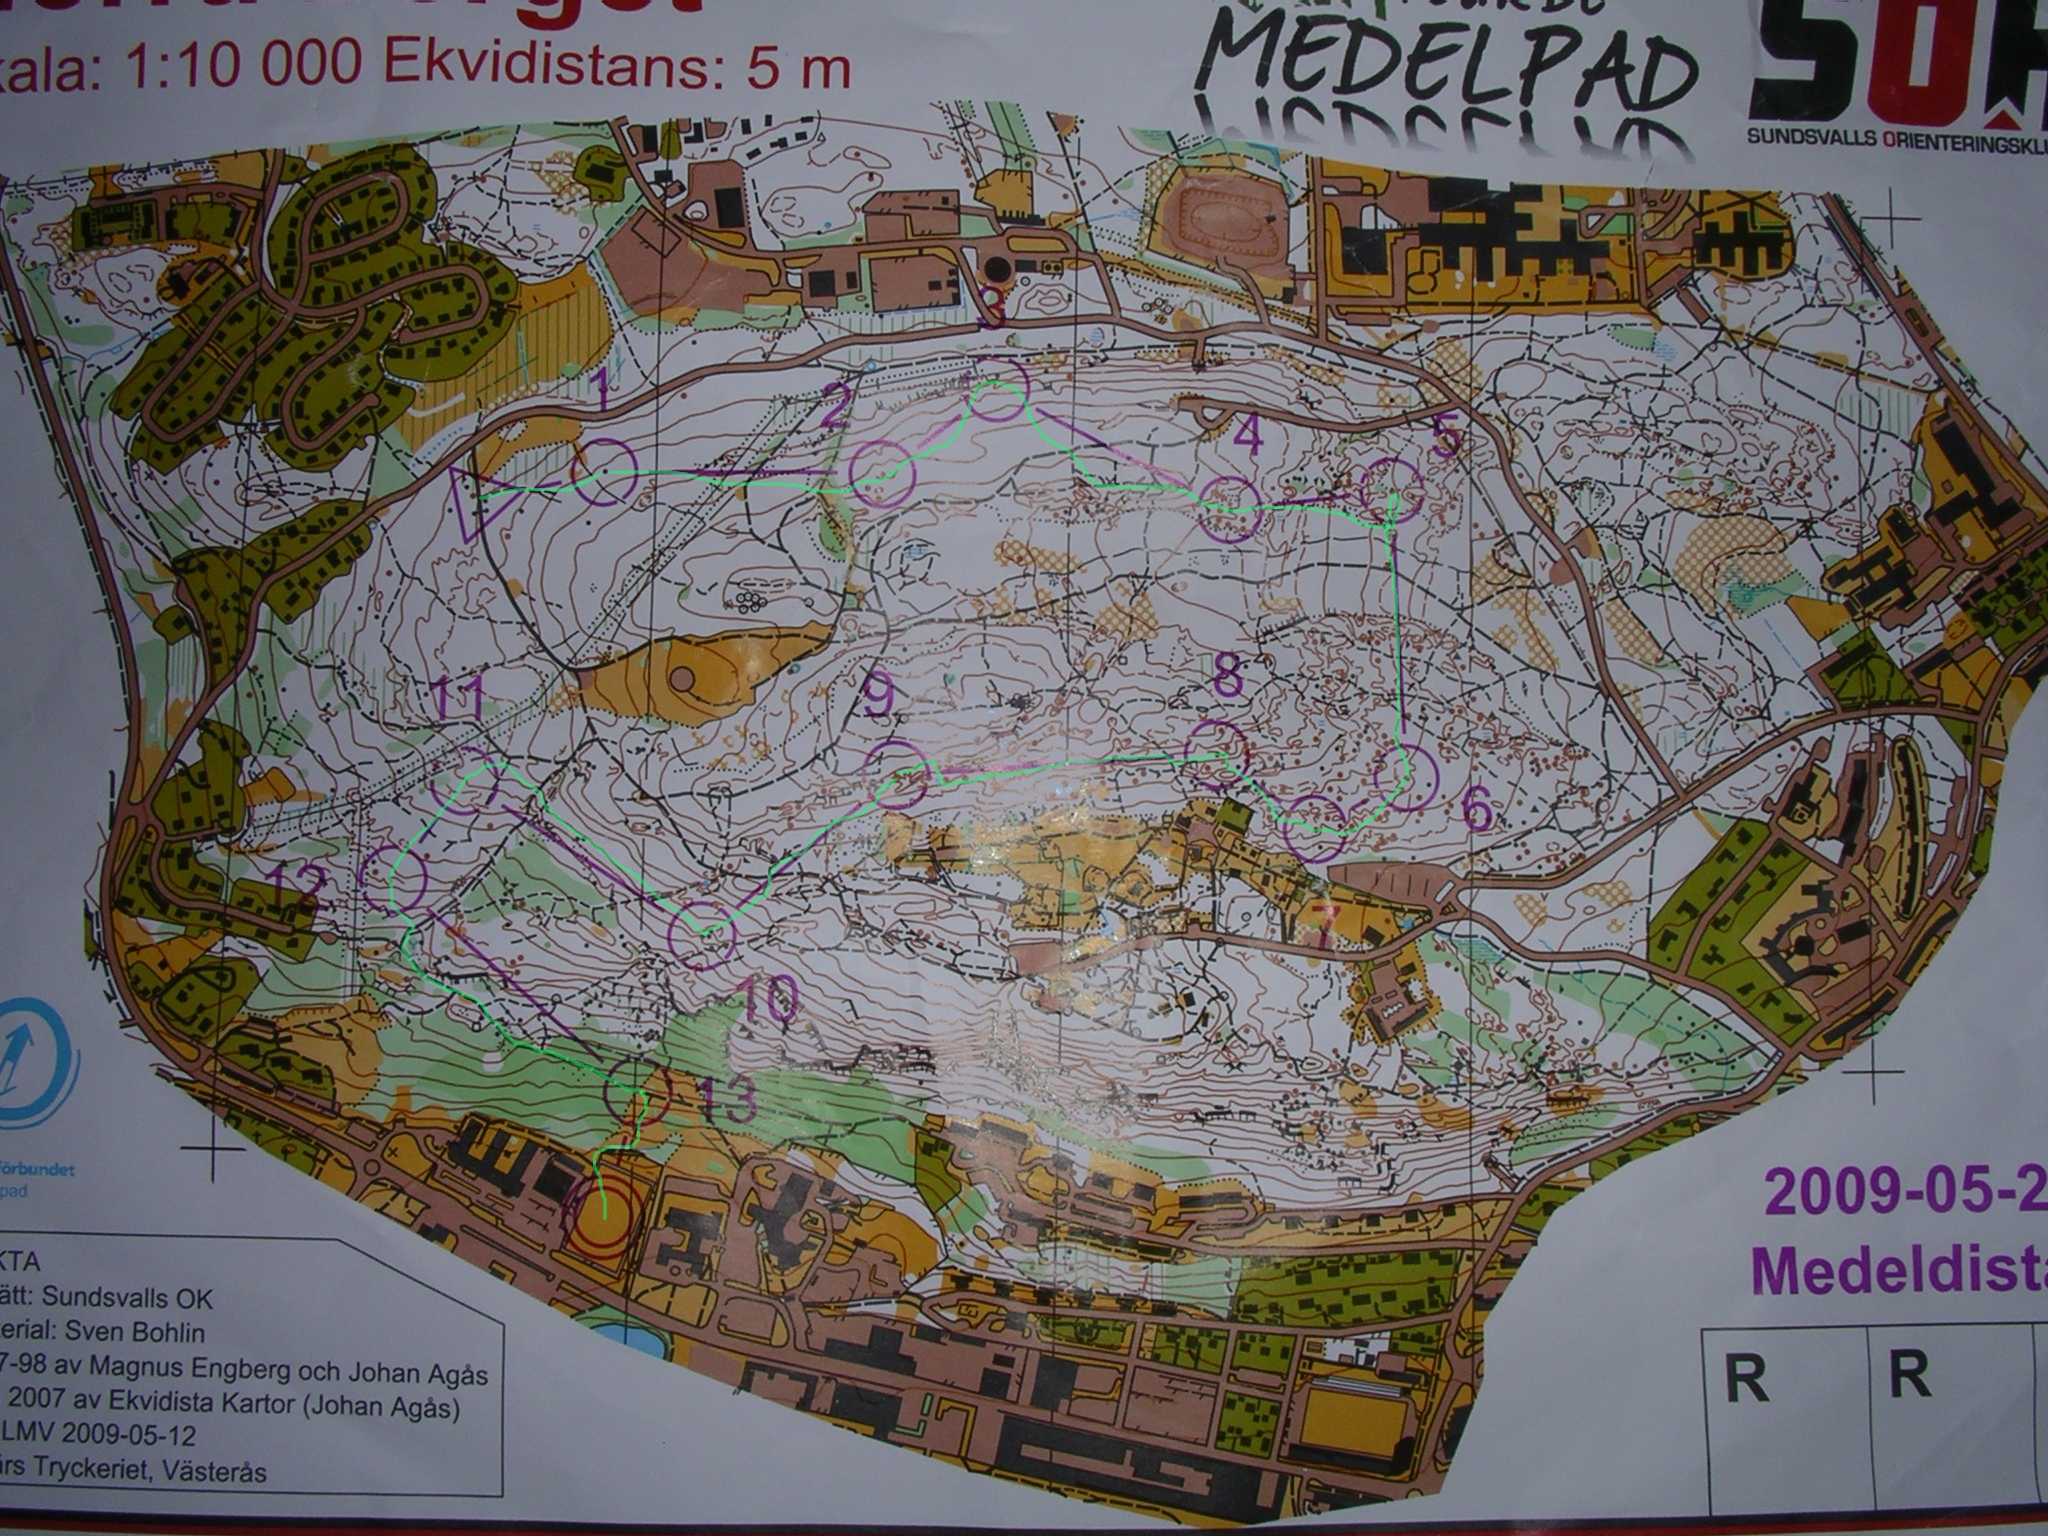 Tour de Medelpad - Sundsvallsträffen Medel (2009-05-21)